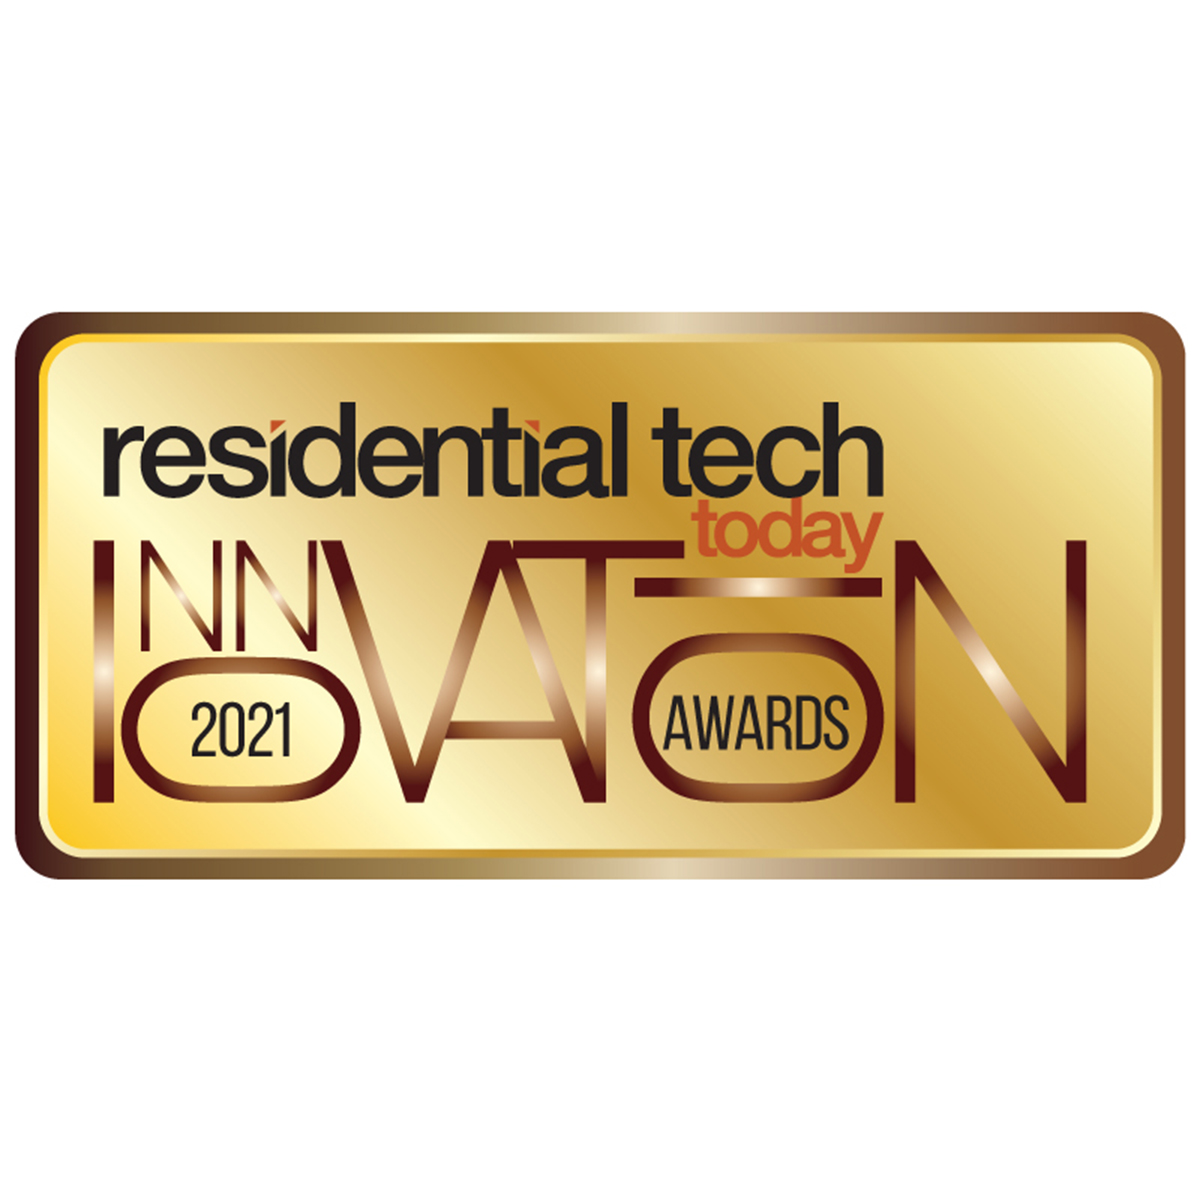 Residential Tech Innovation Awards (Prix de l’innovation technologique résidentielle)